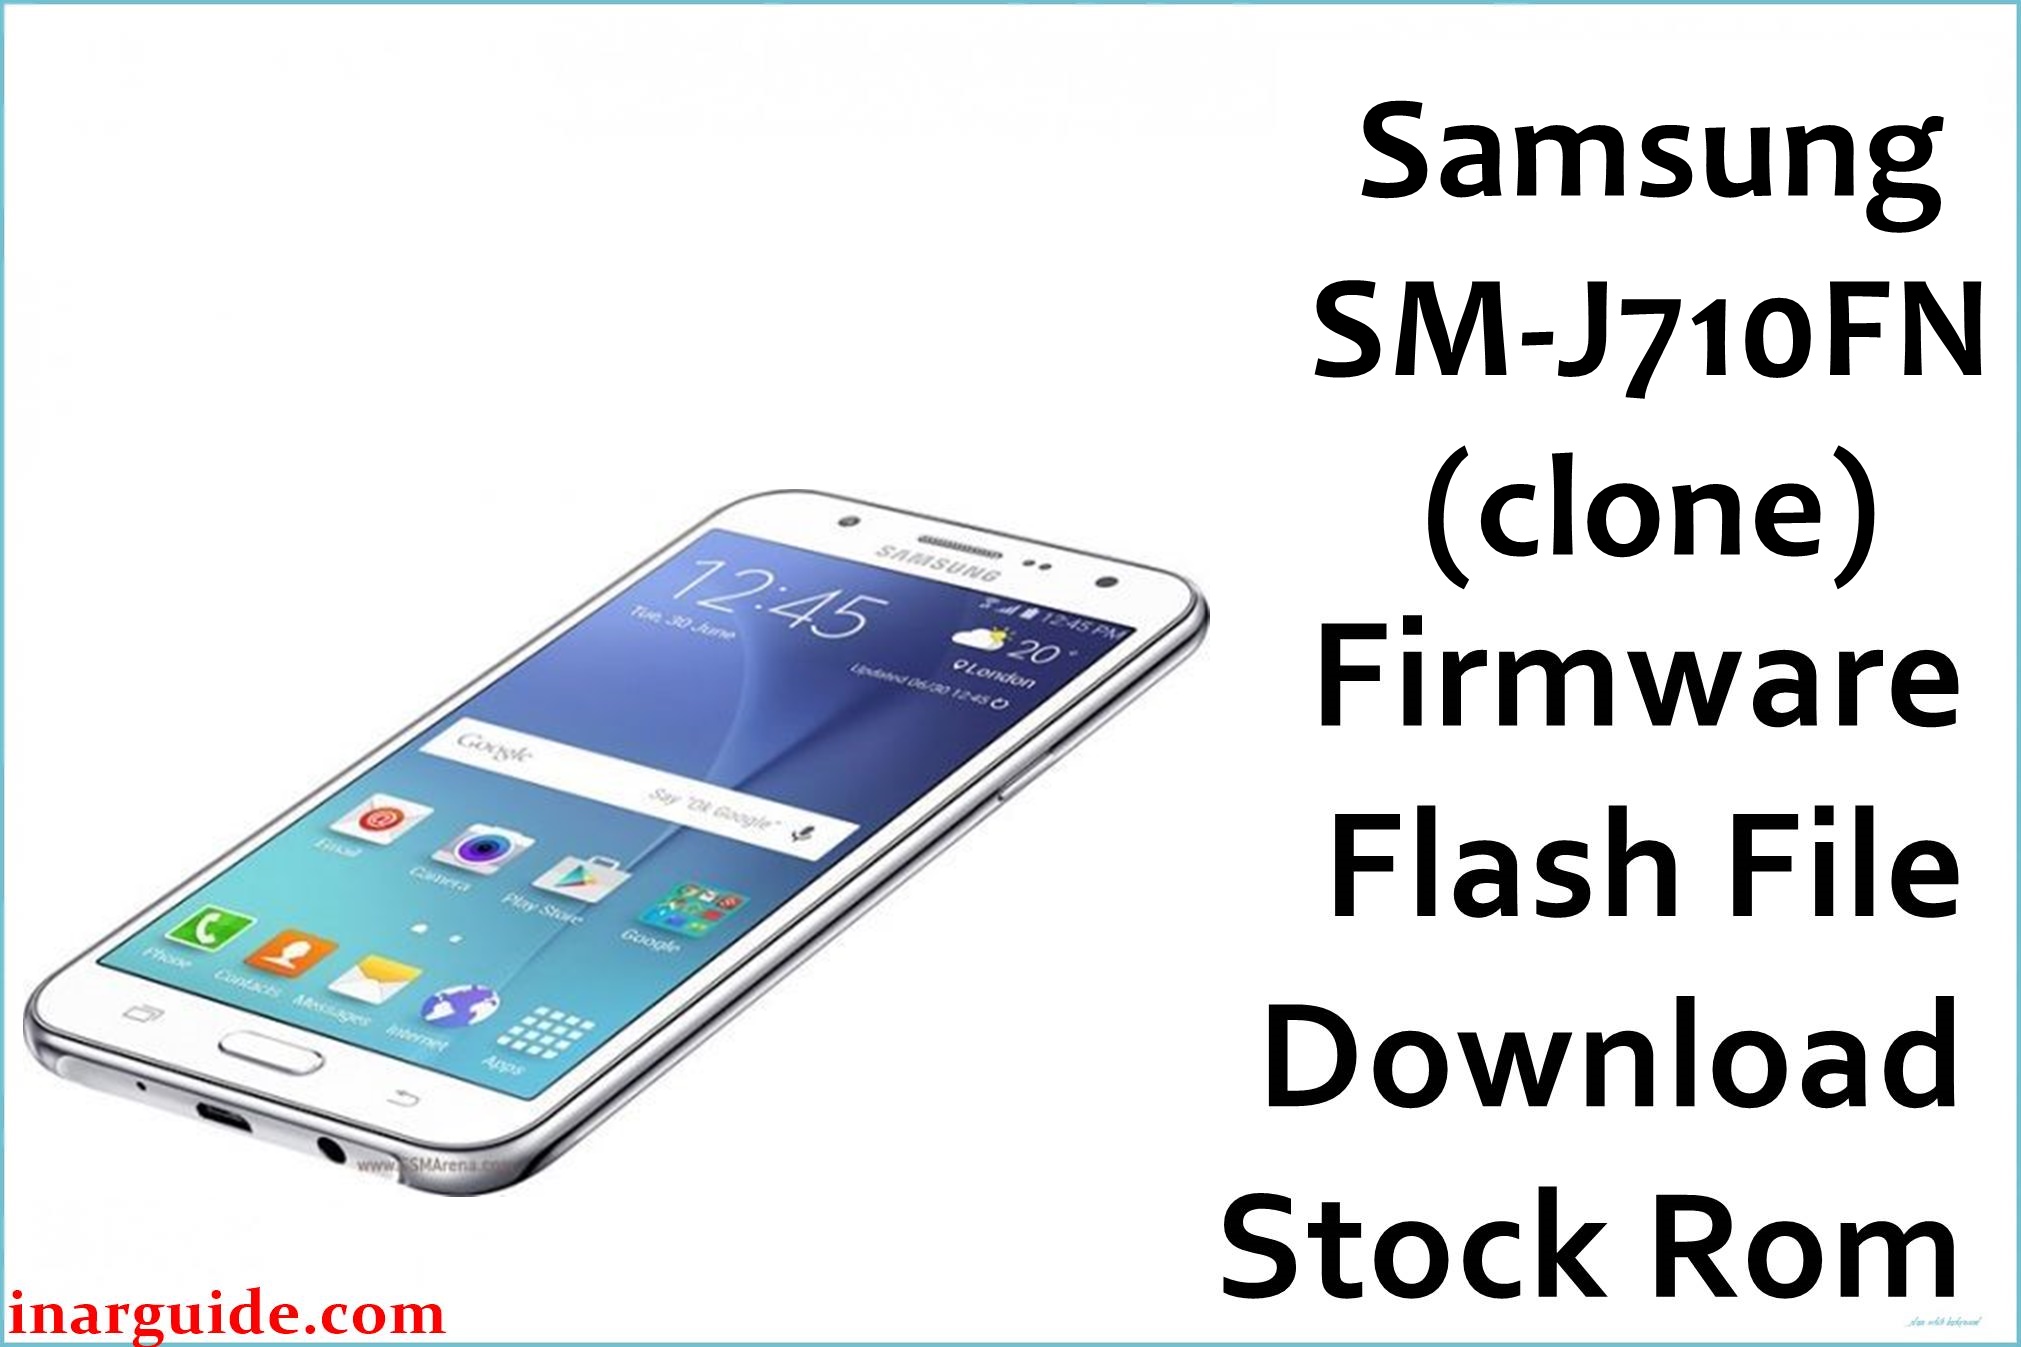 Samsung SM J710FN clone